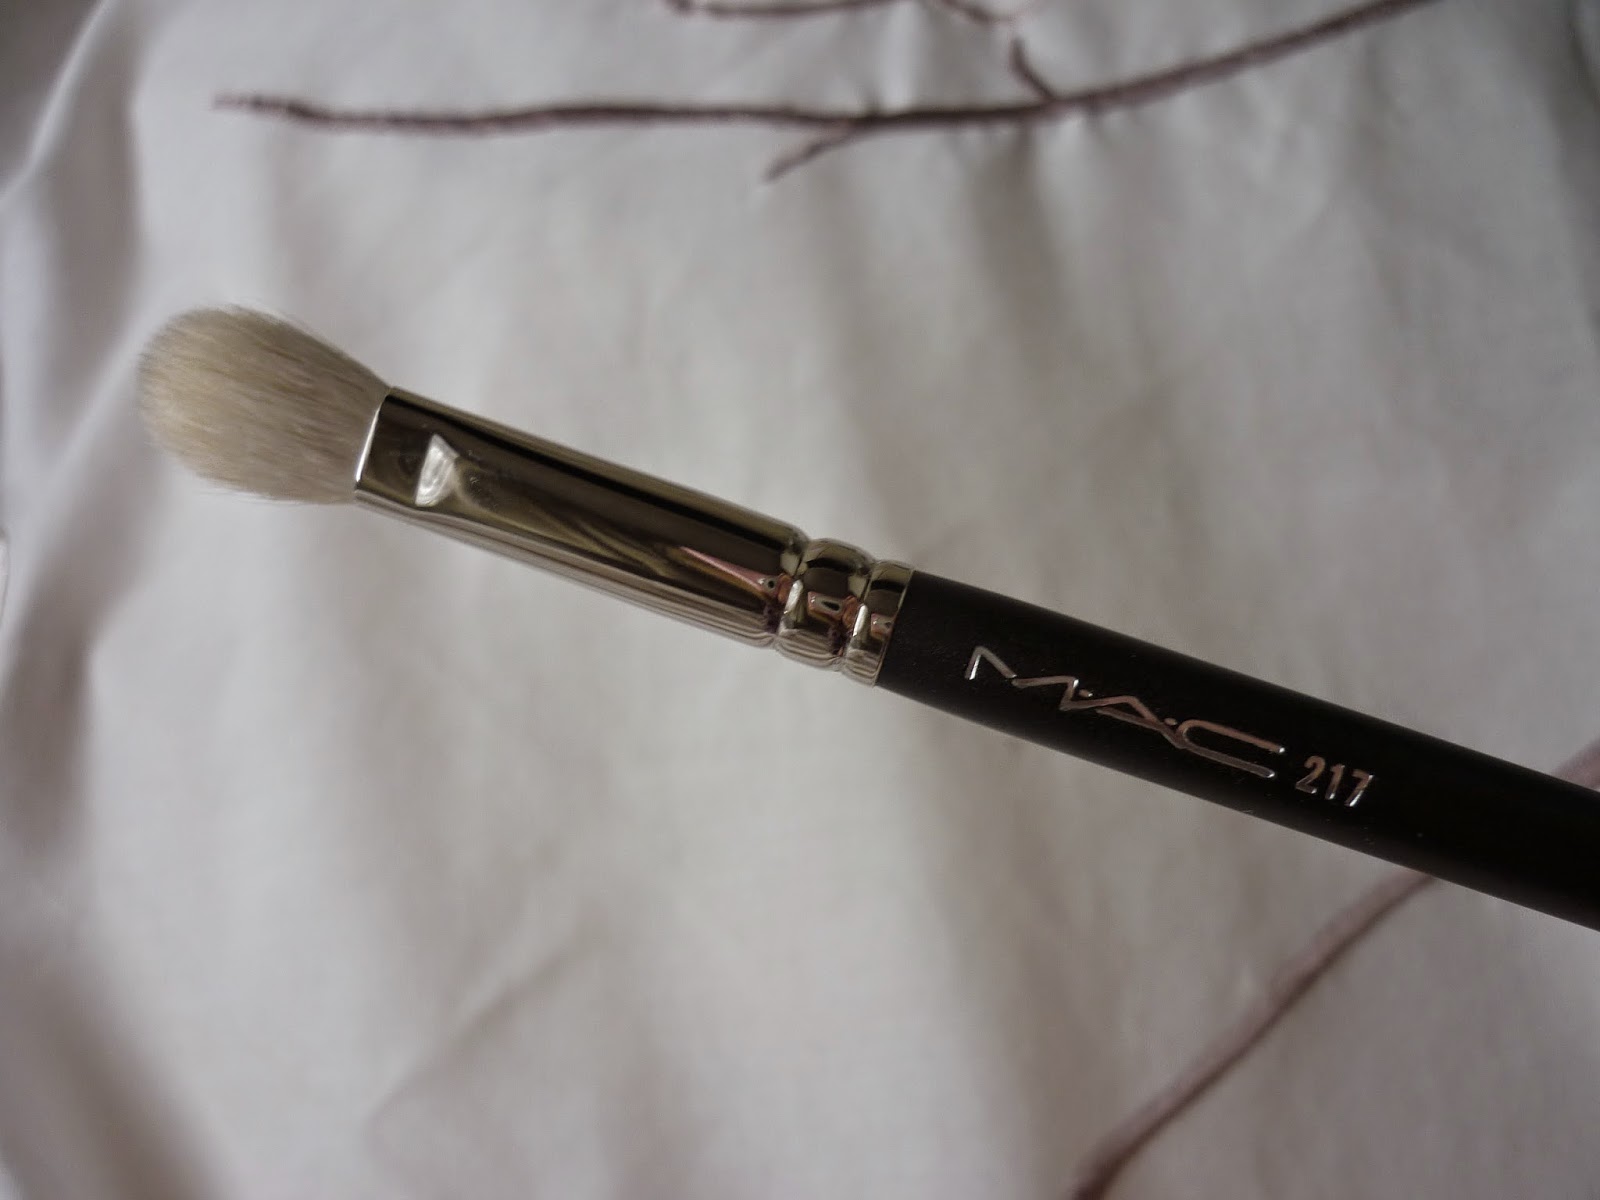 MAC 217 brush, eye shadow brush